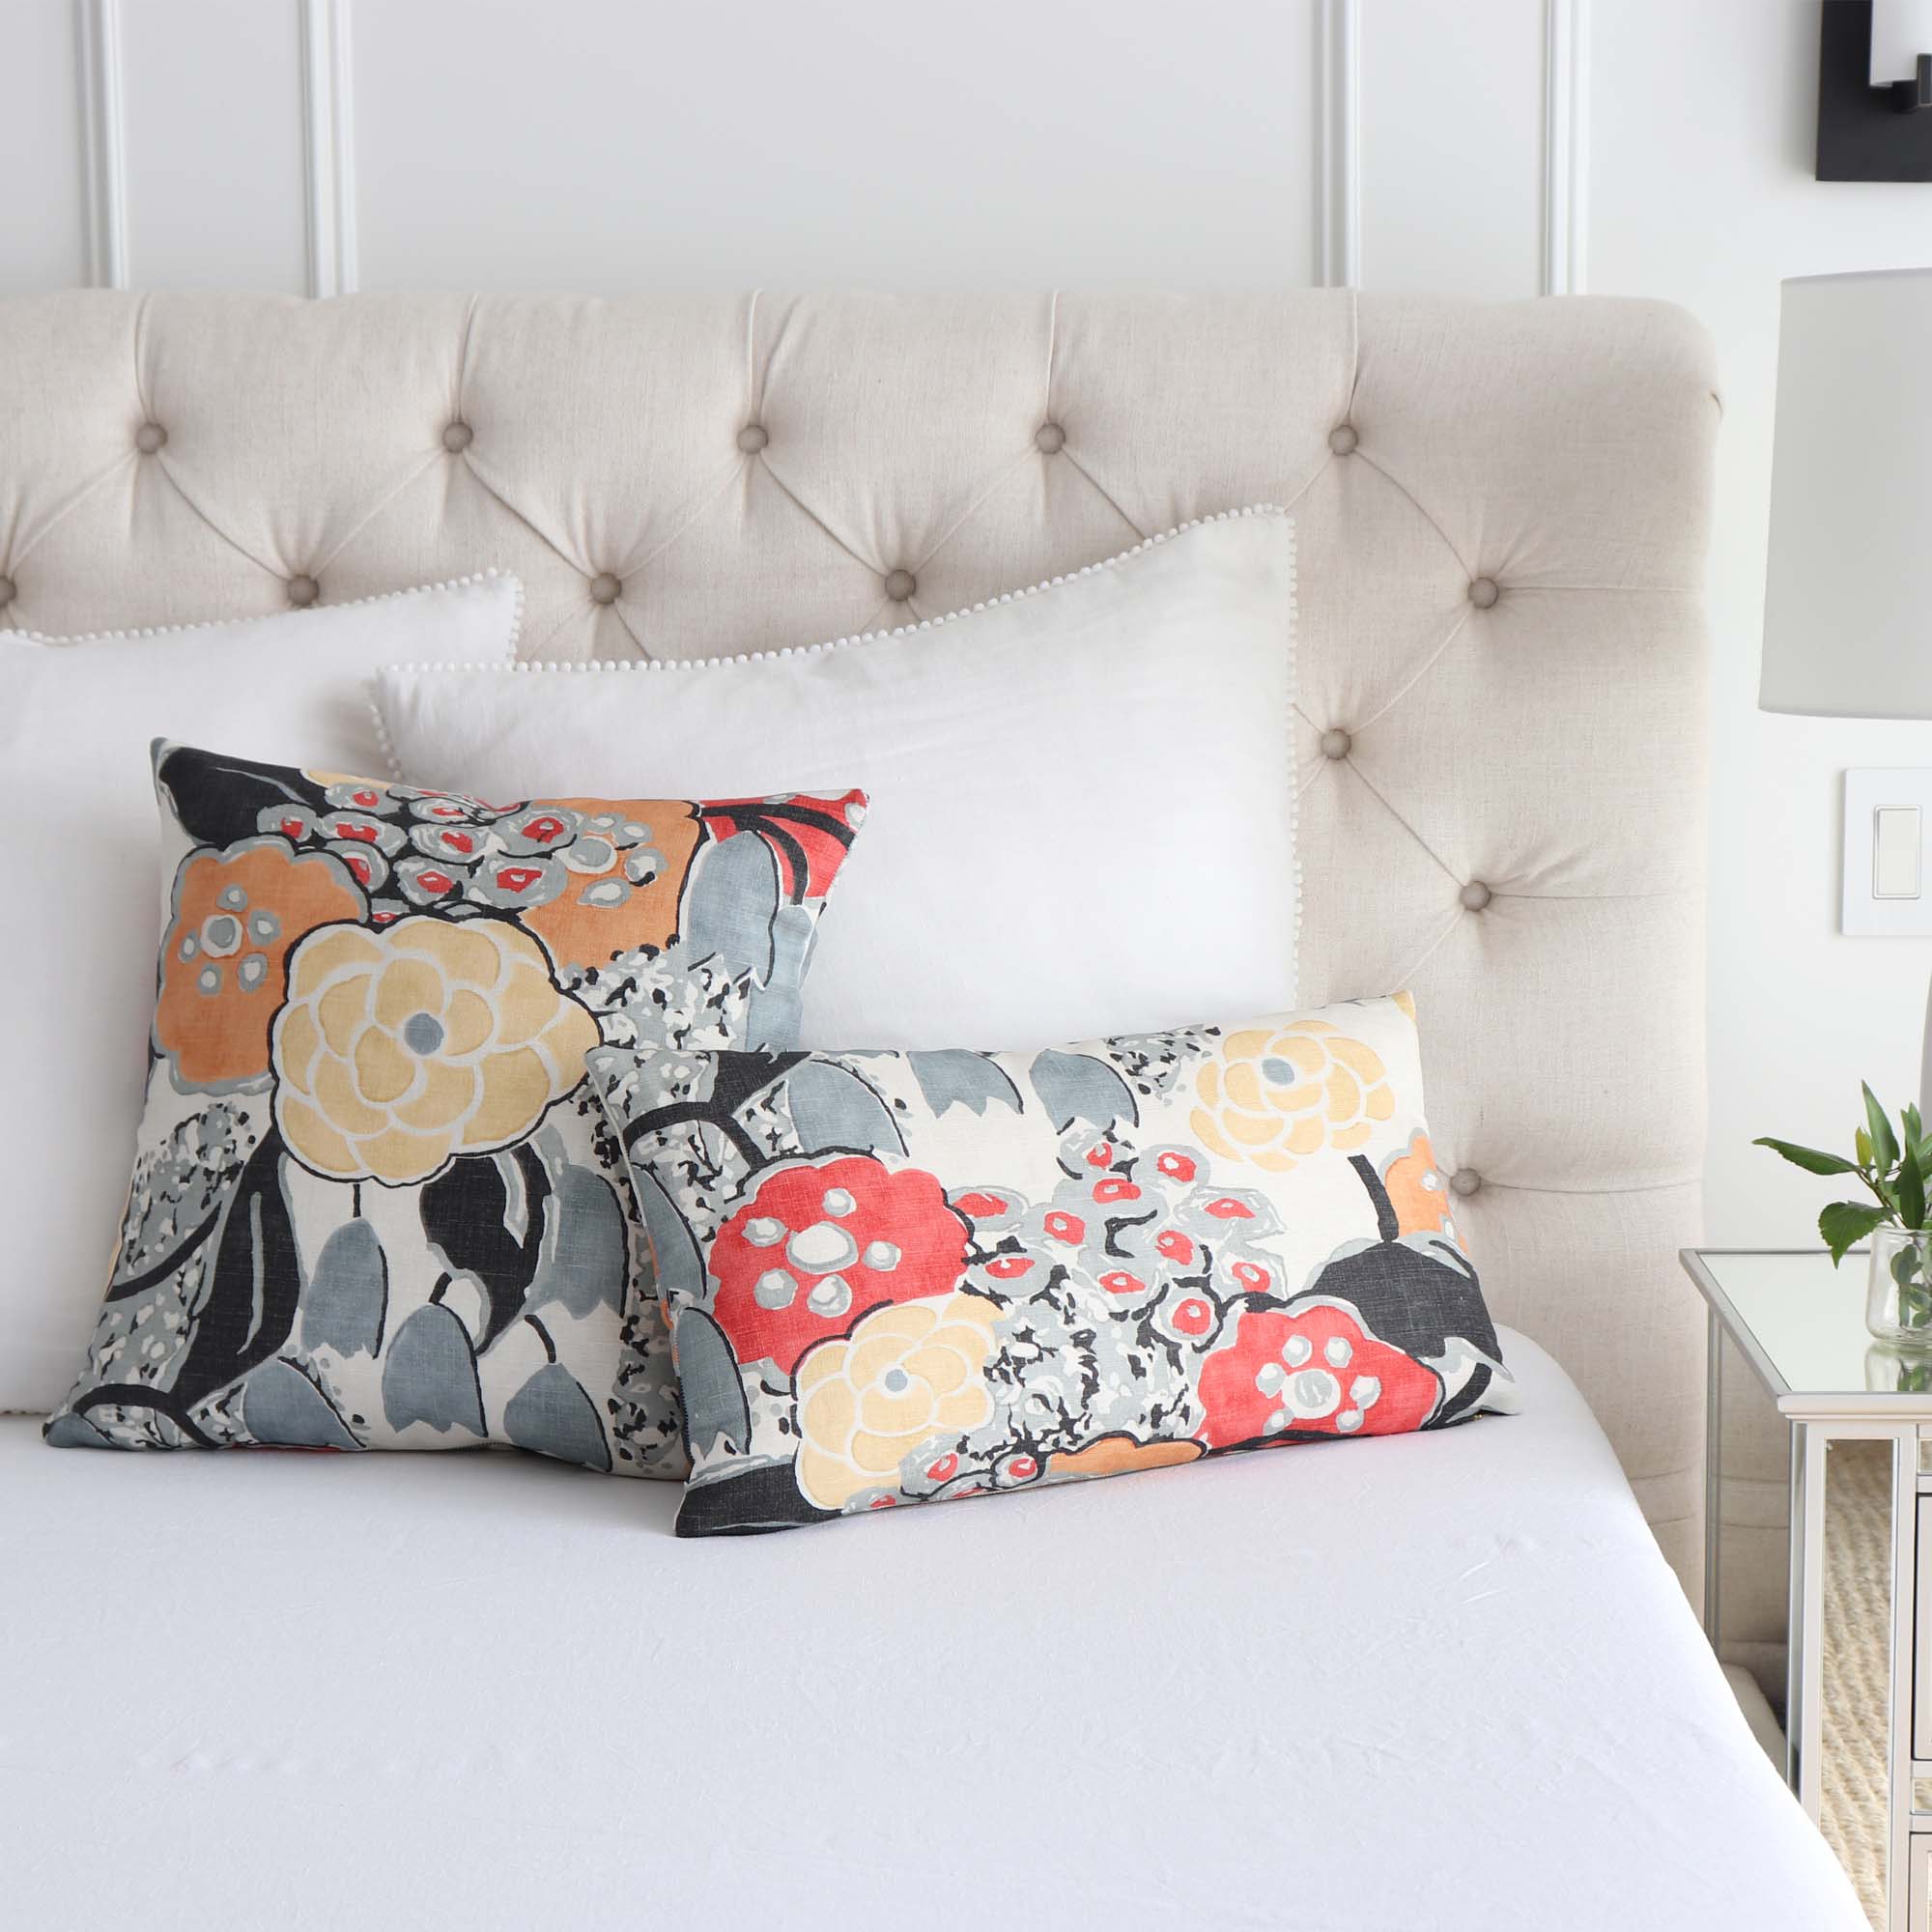 Thibaut Anna French Laura Coral Orange Black Floral Linen Designer Decorative Throw Pillow Cover